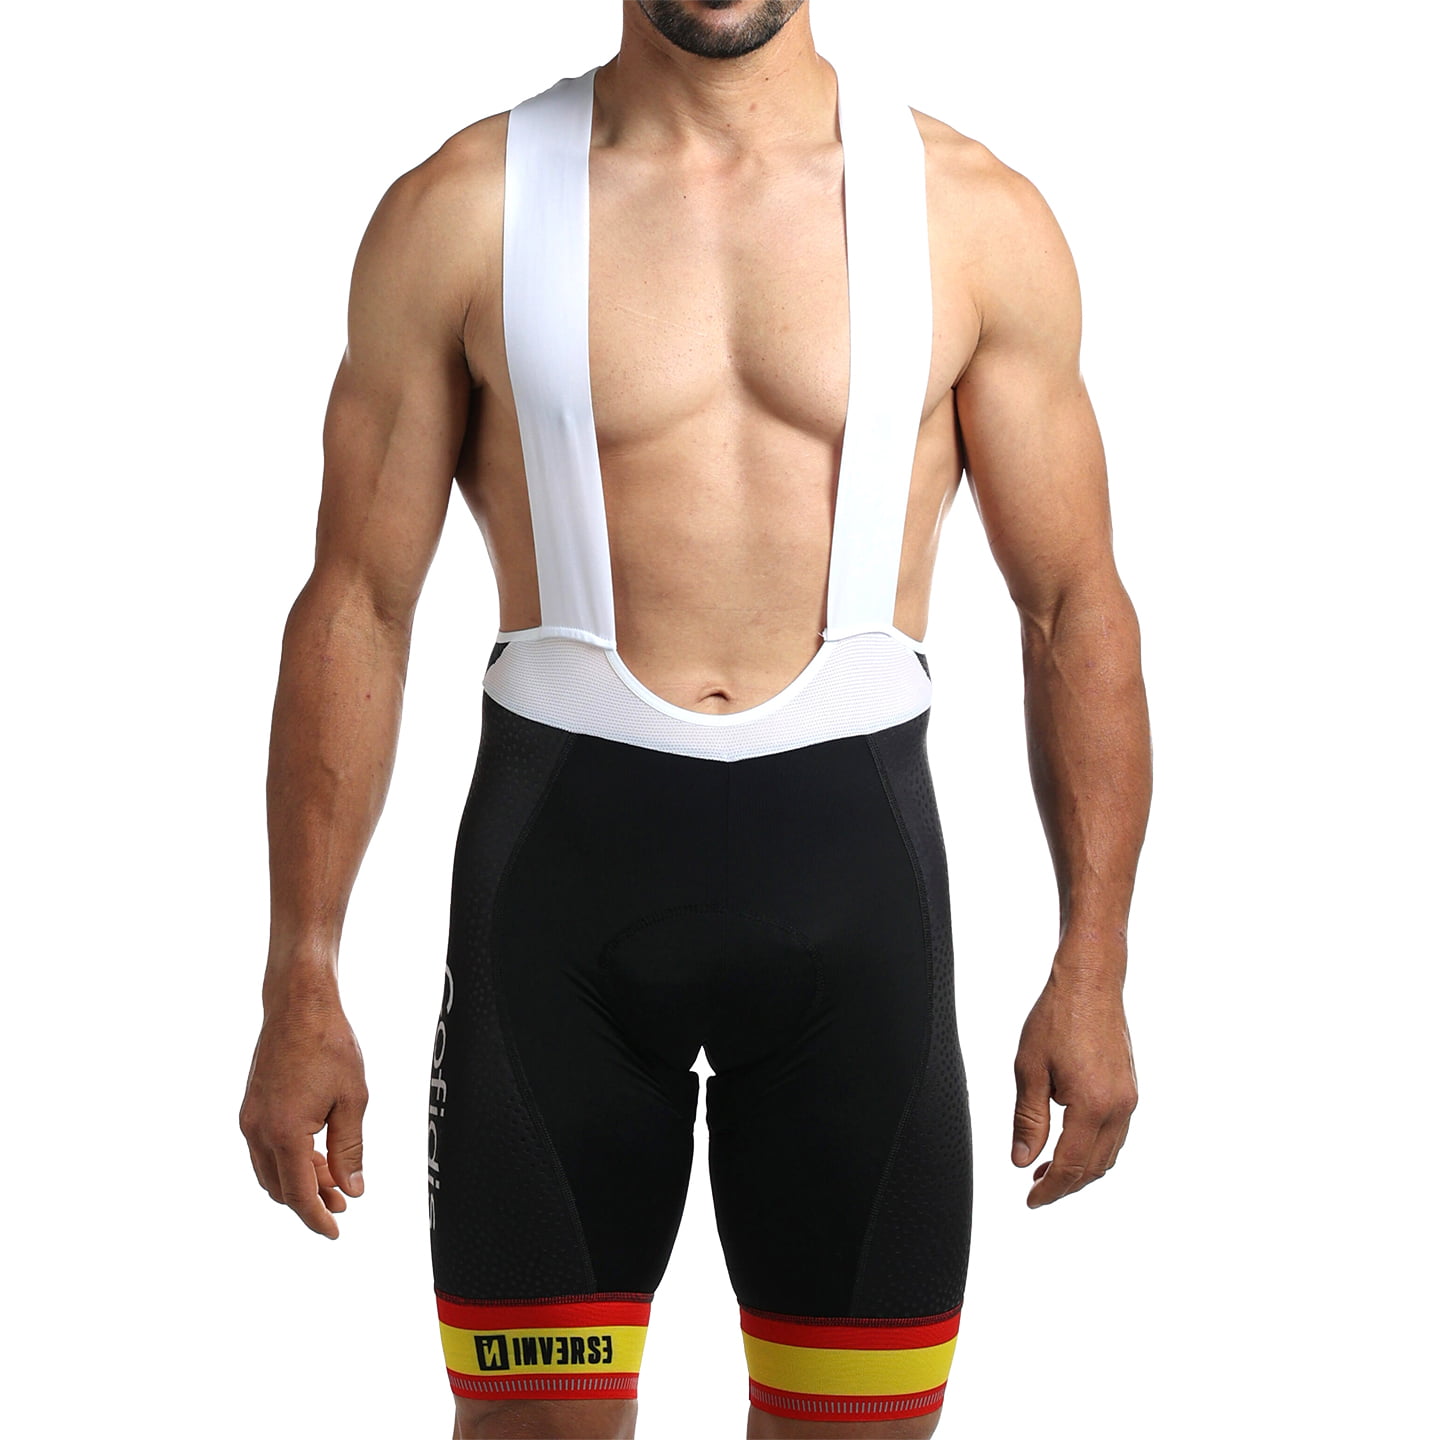 SPANISH NATIONAL TEAM 2024 Bib Shorts, for men, size S, Cycle shorts, Cycling clothing